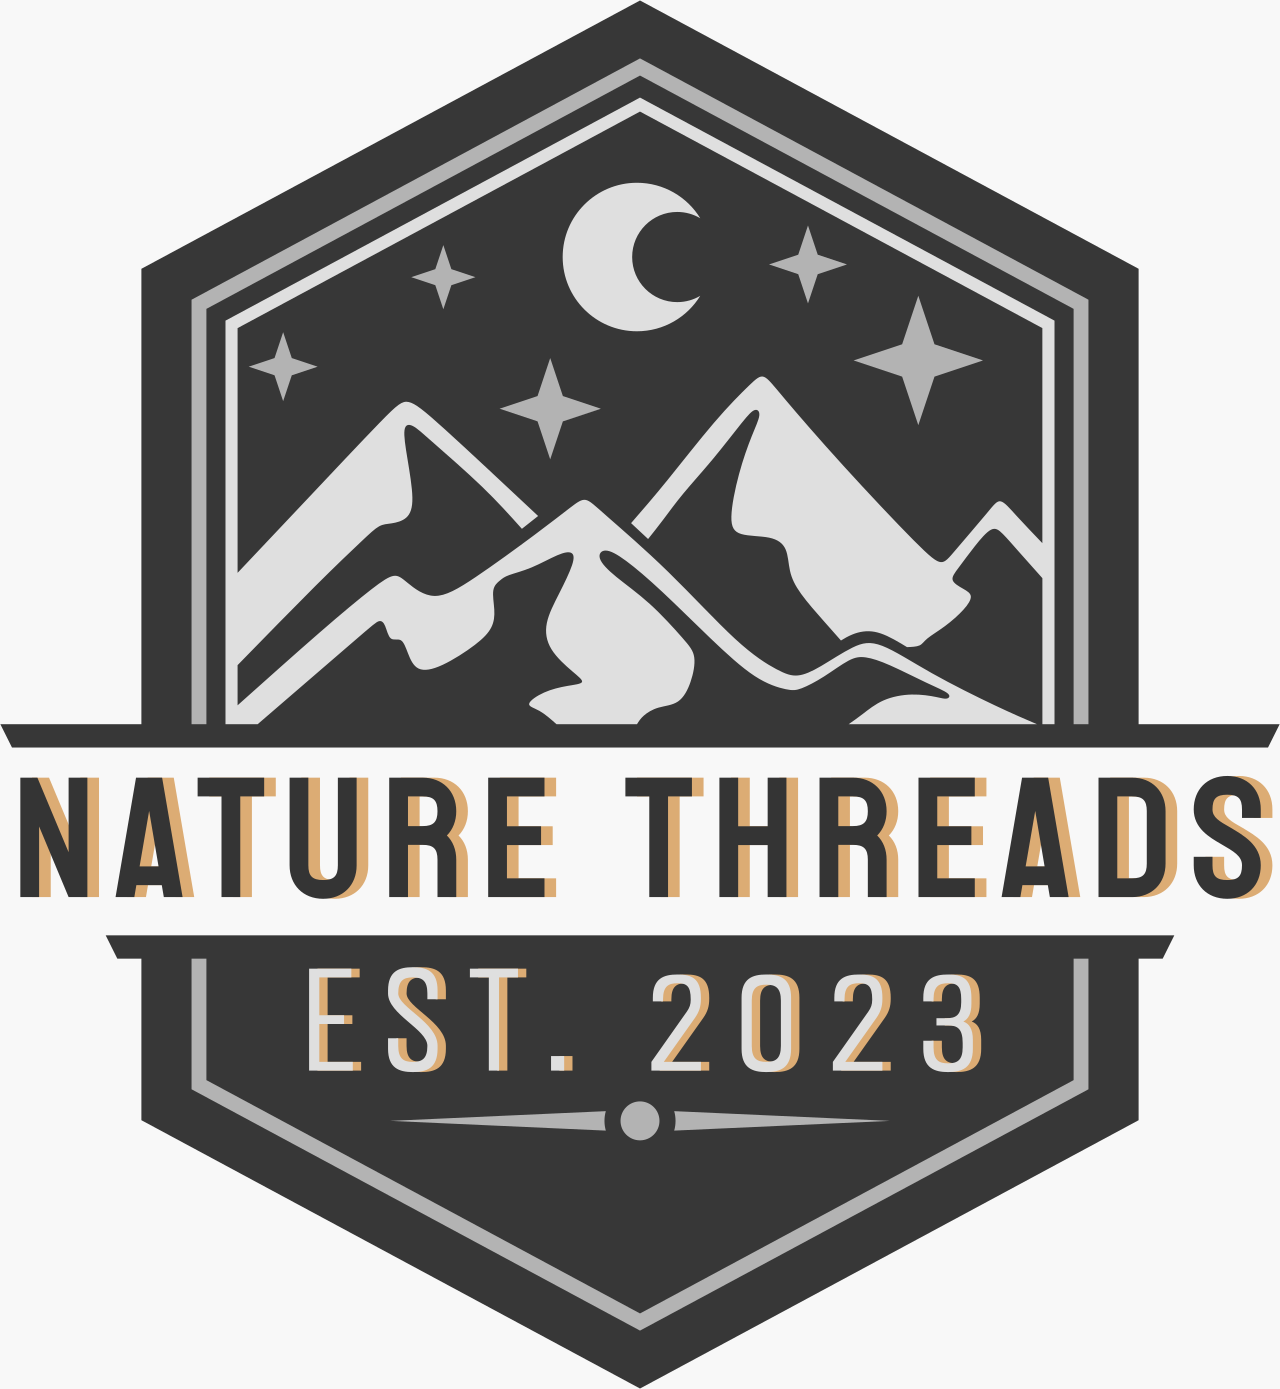 Nature Threads's logo